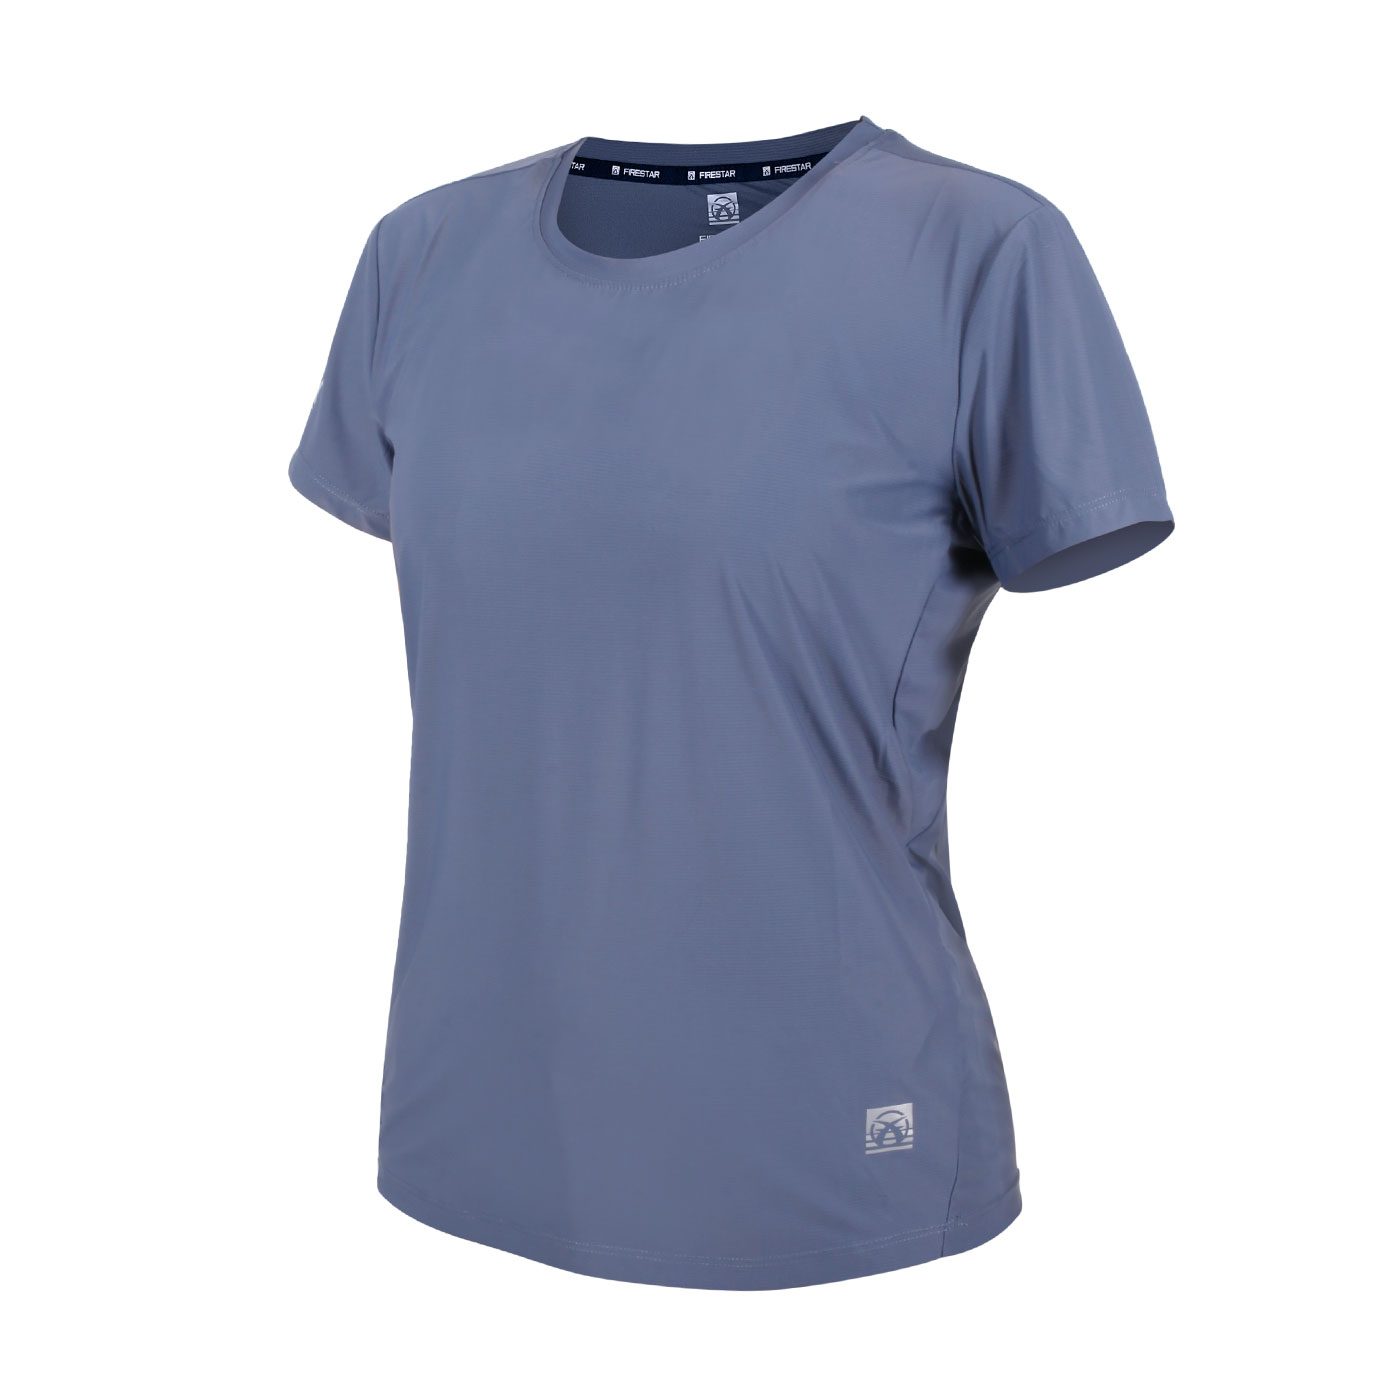 FIRESTAR 女款彈性圓領短袖T恤 DL261-13 - 霧紫